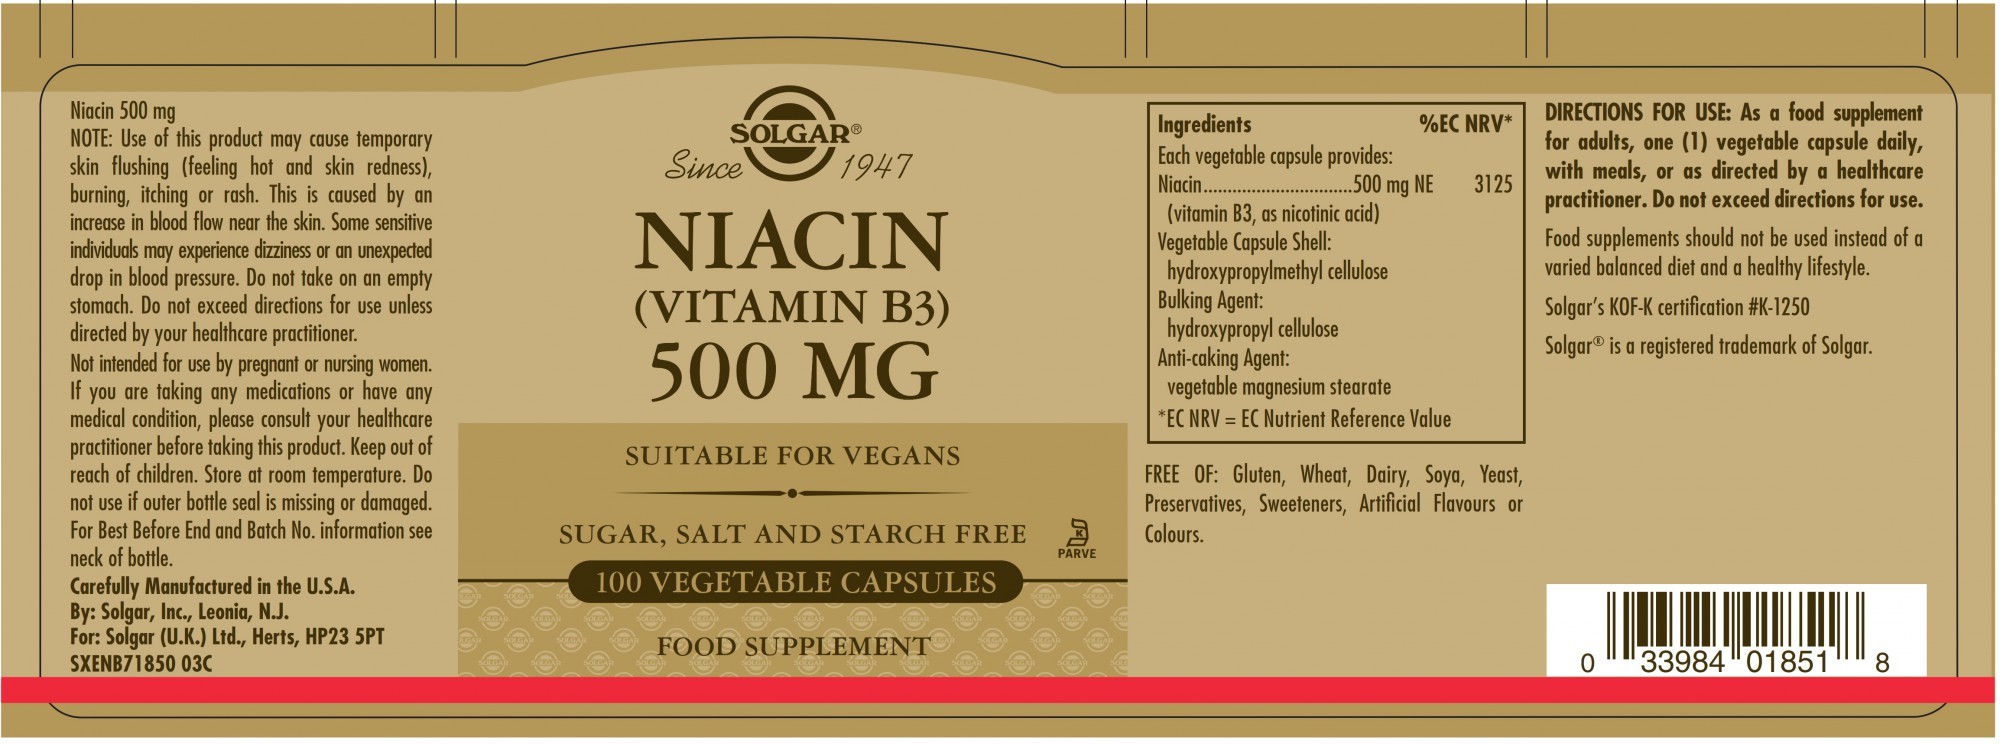 Solgar Niacin (Vitamin B3) 500 MG